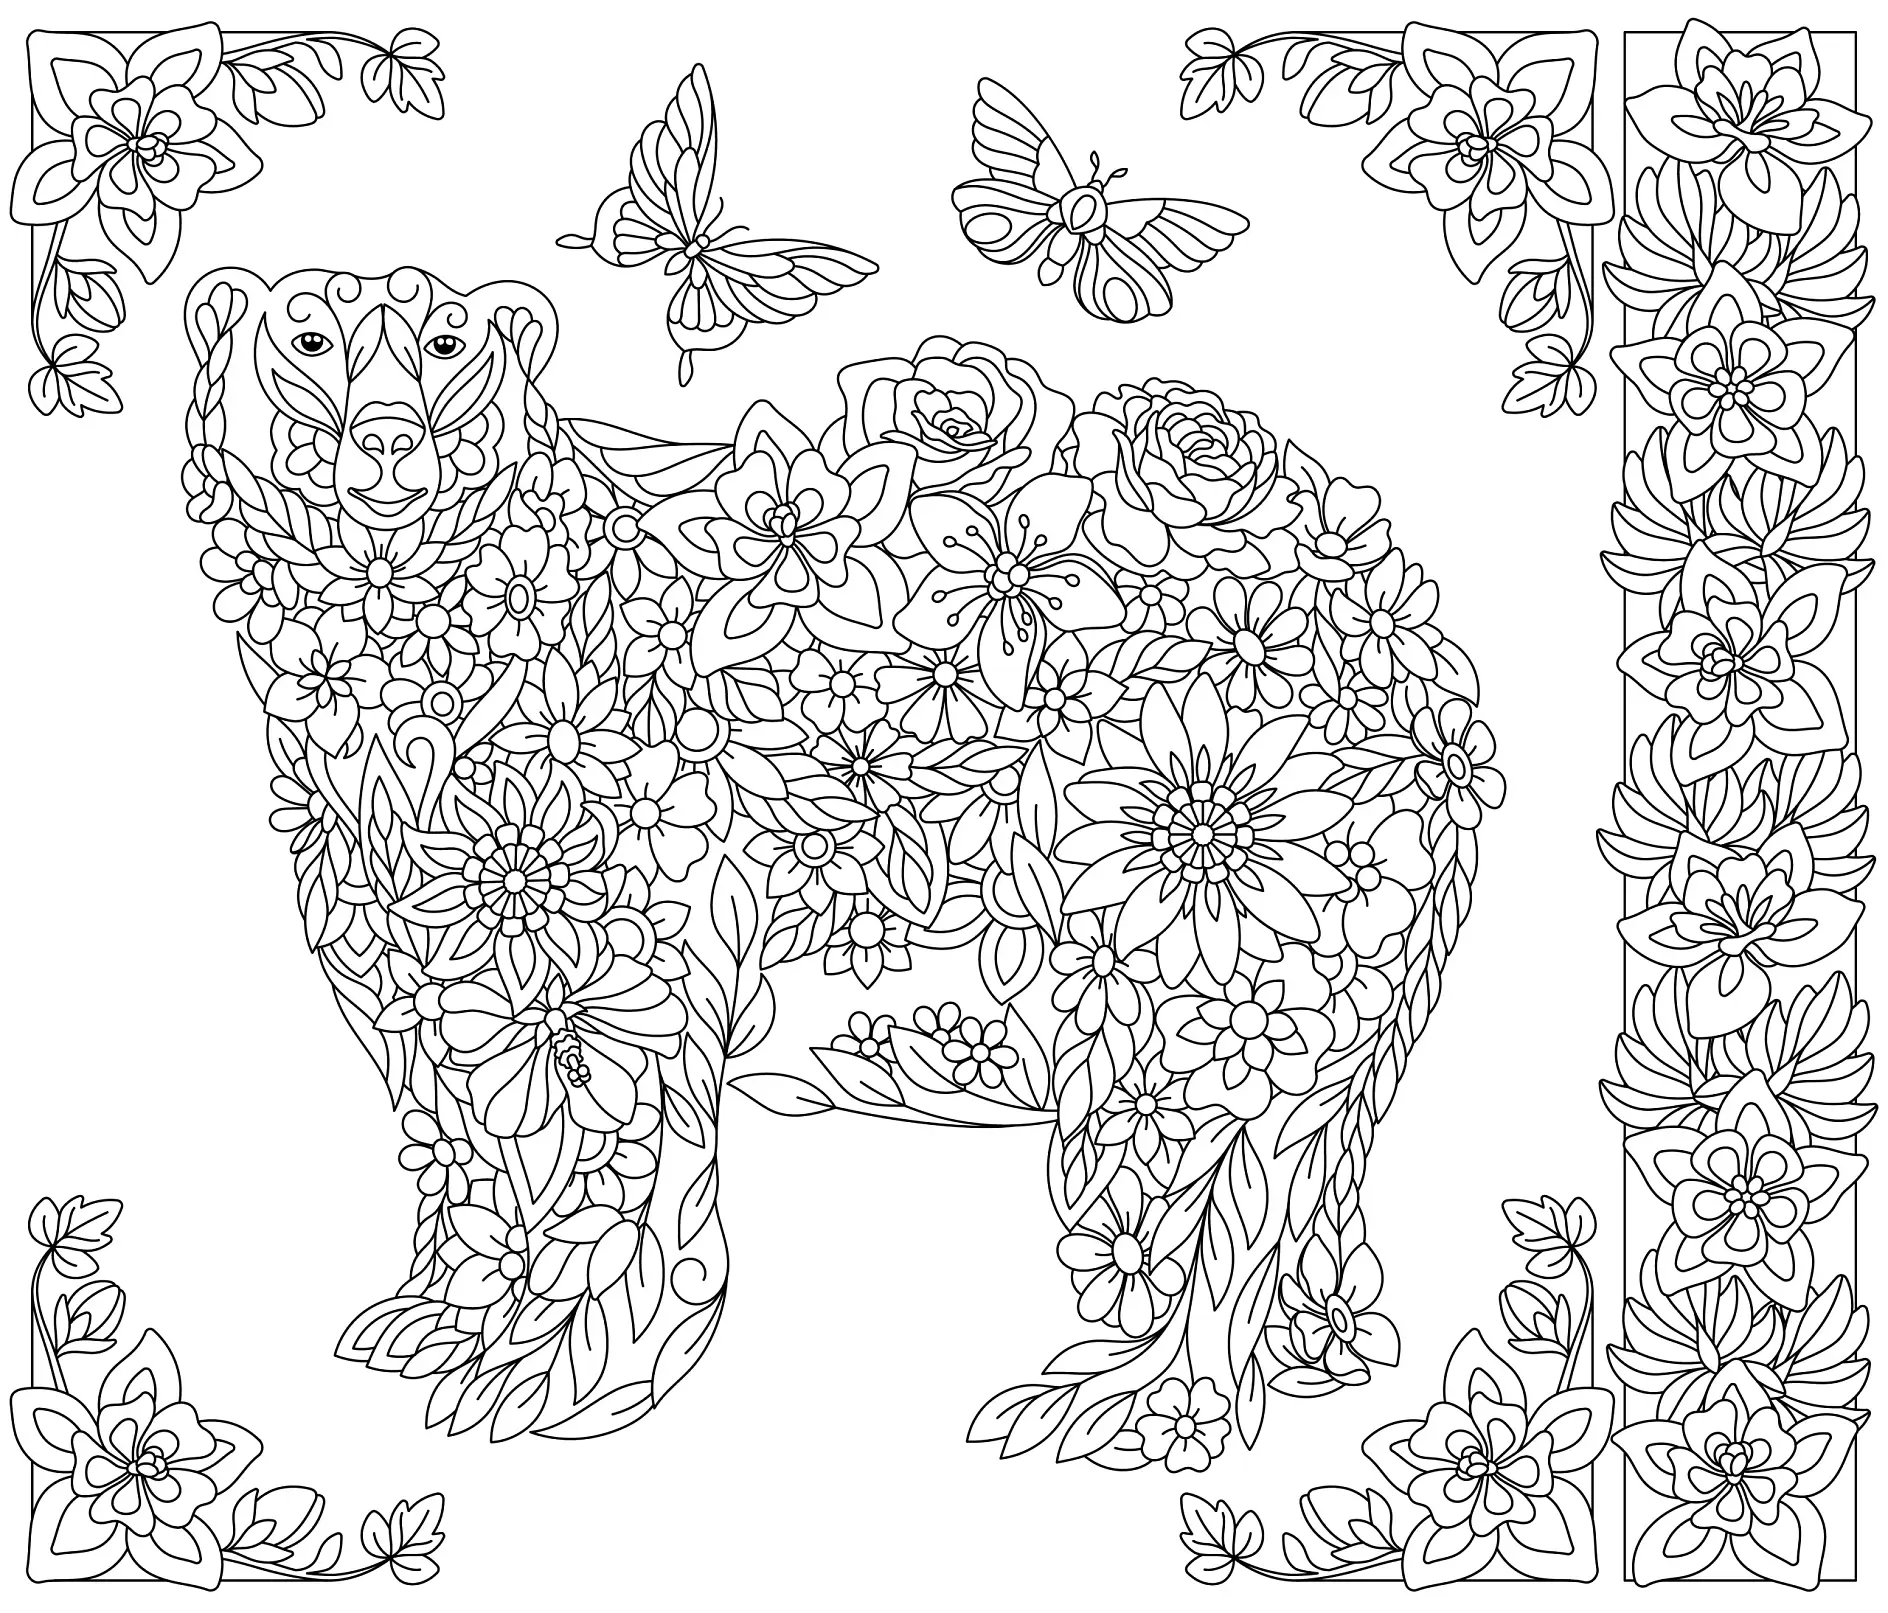 Ausmalbild Mandala Bär mit Blumenmuster und Schmetterlingen